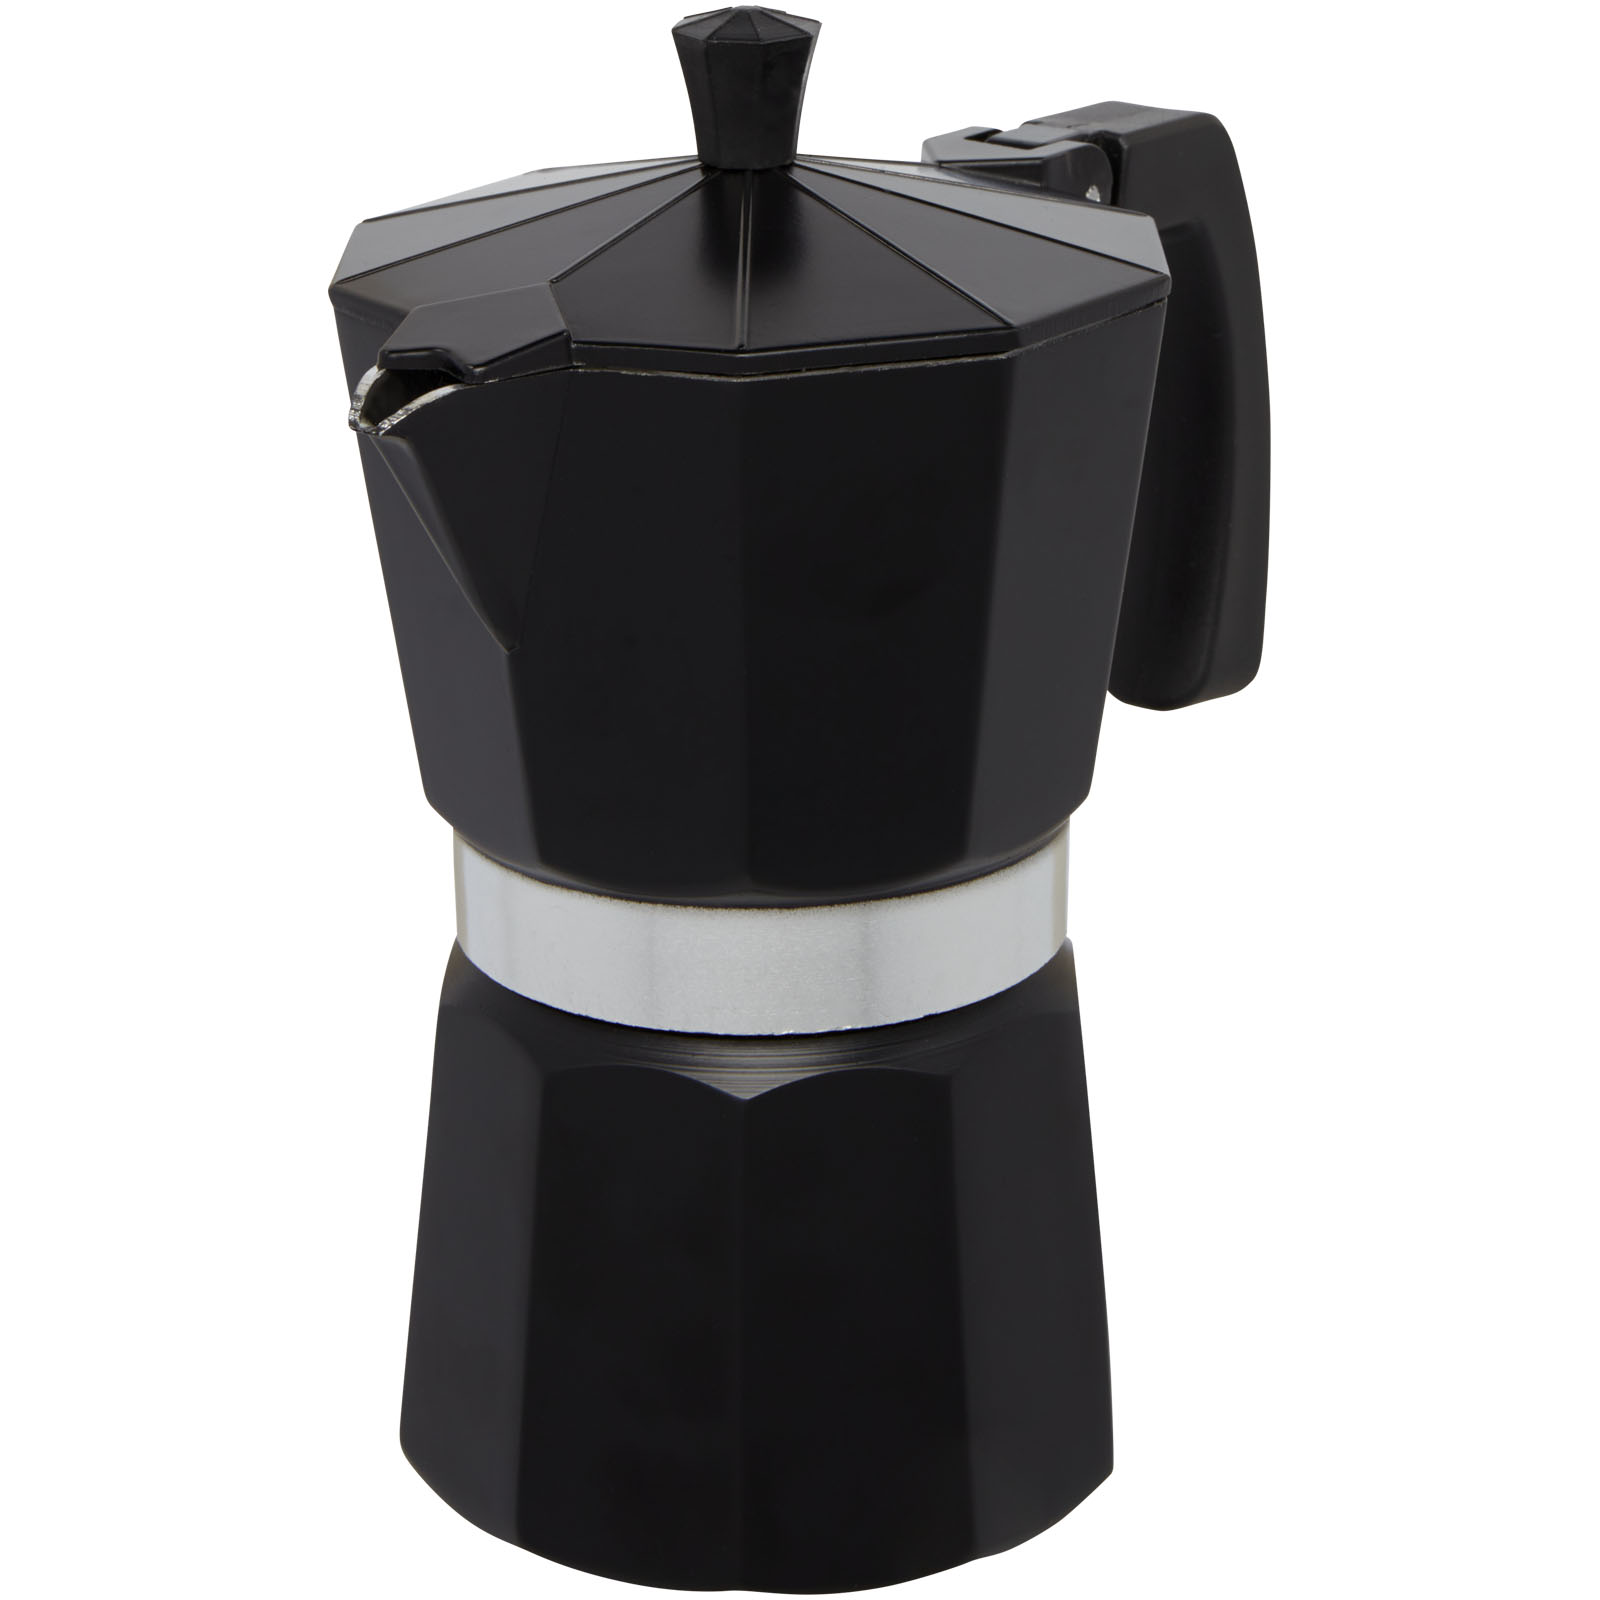 Advertising Kitchenware - Kone 600 ml mocha coffee maker